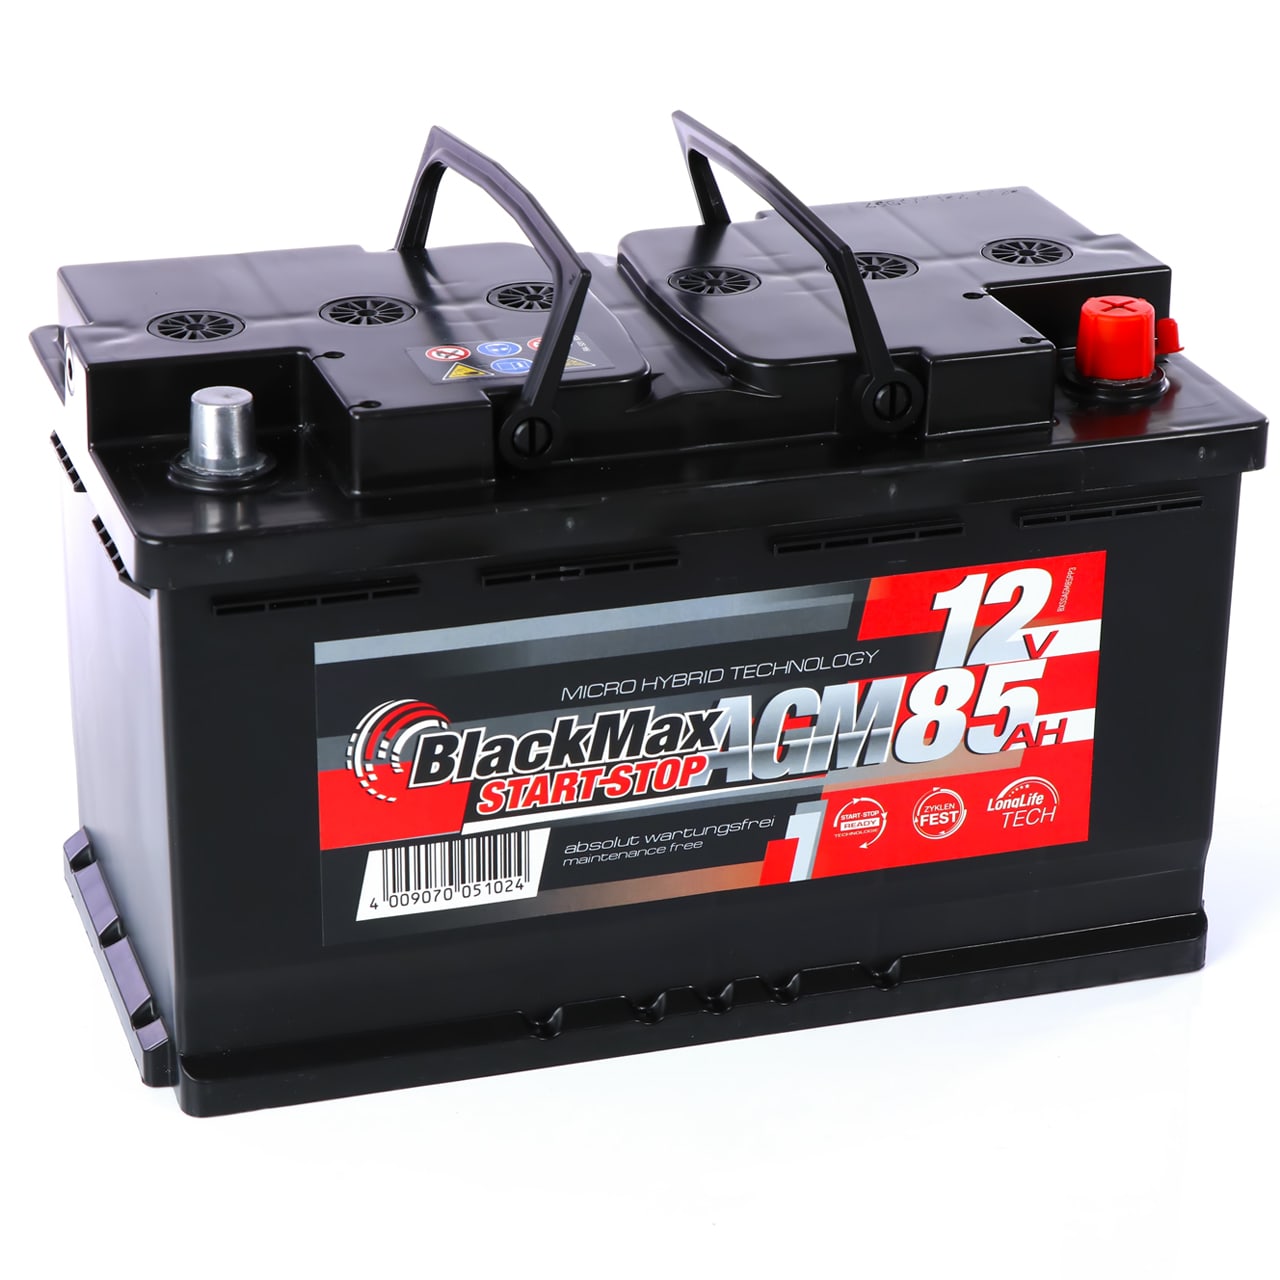 AGM Autobatterie 12V 92Ah 850A Start-Stop-Technologie